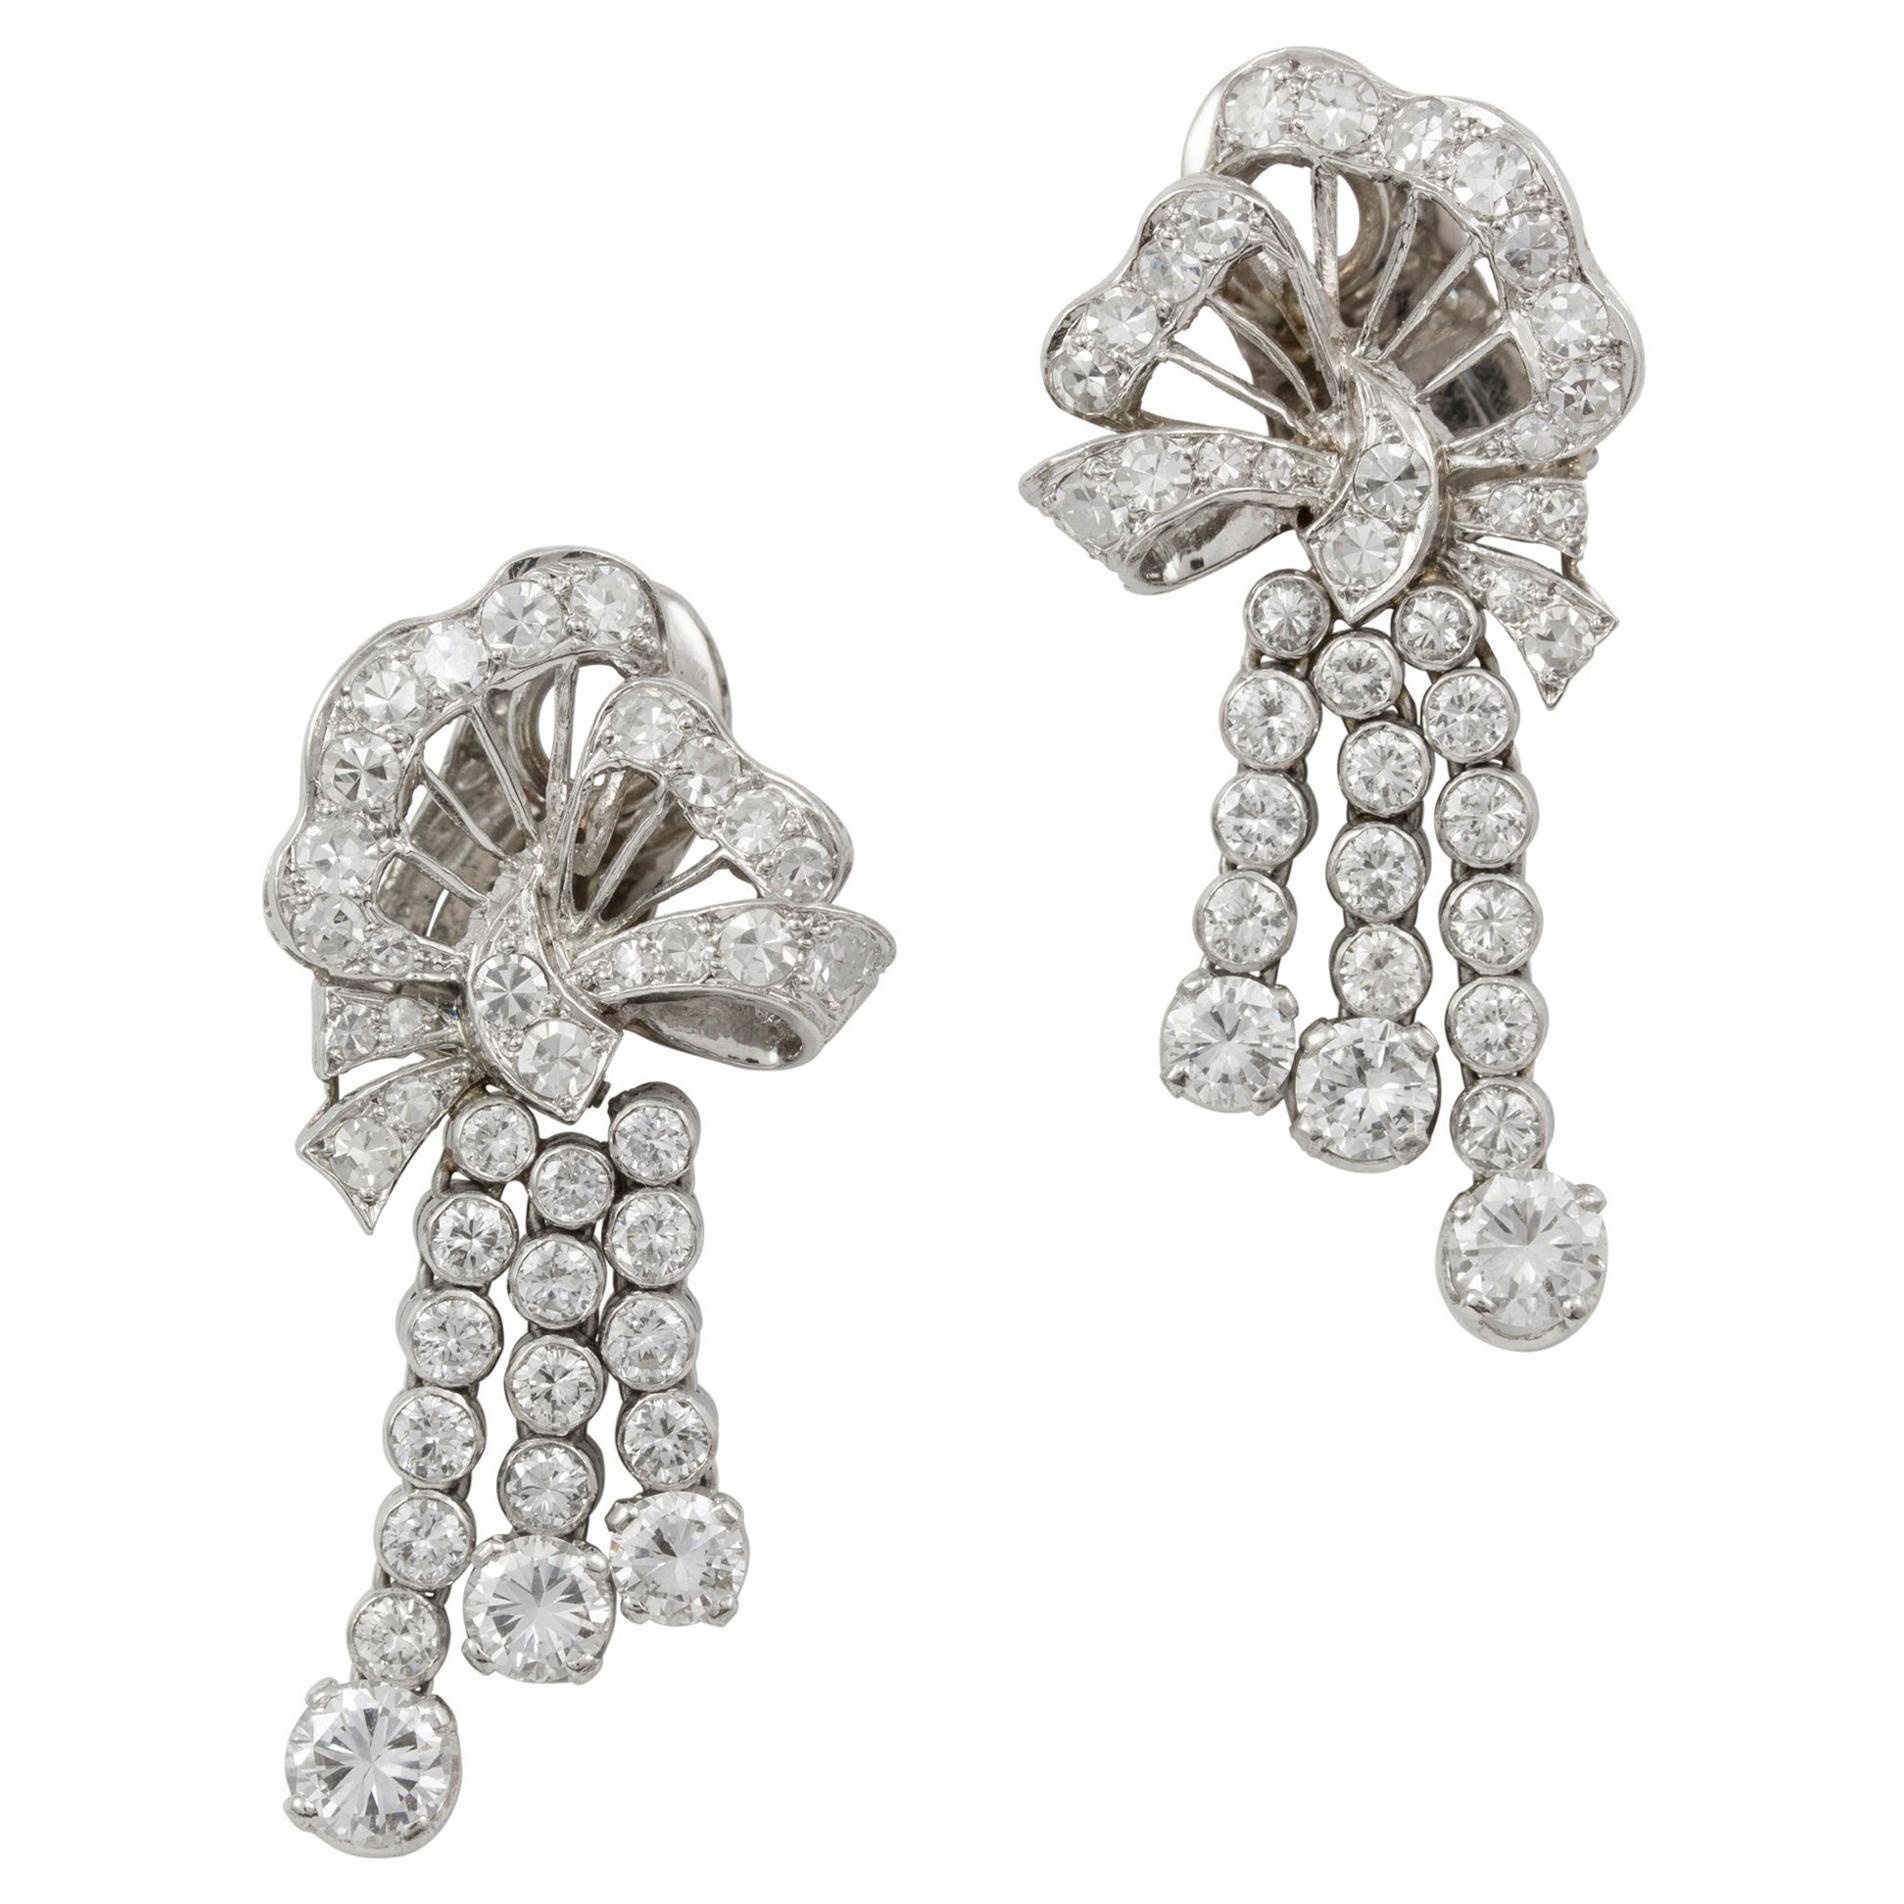 Pair of Mid-20th Century Diamond-Set Bow and Tassel Earrings